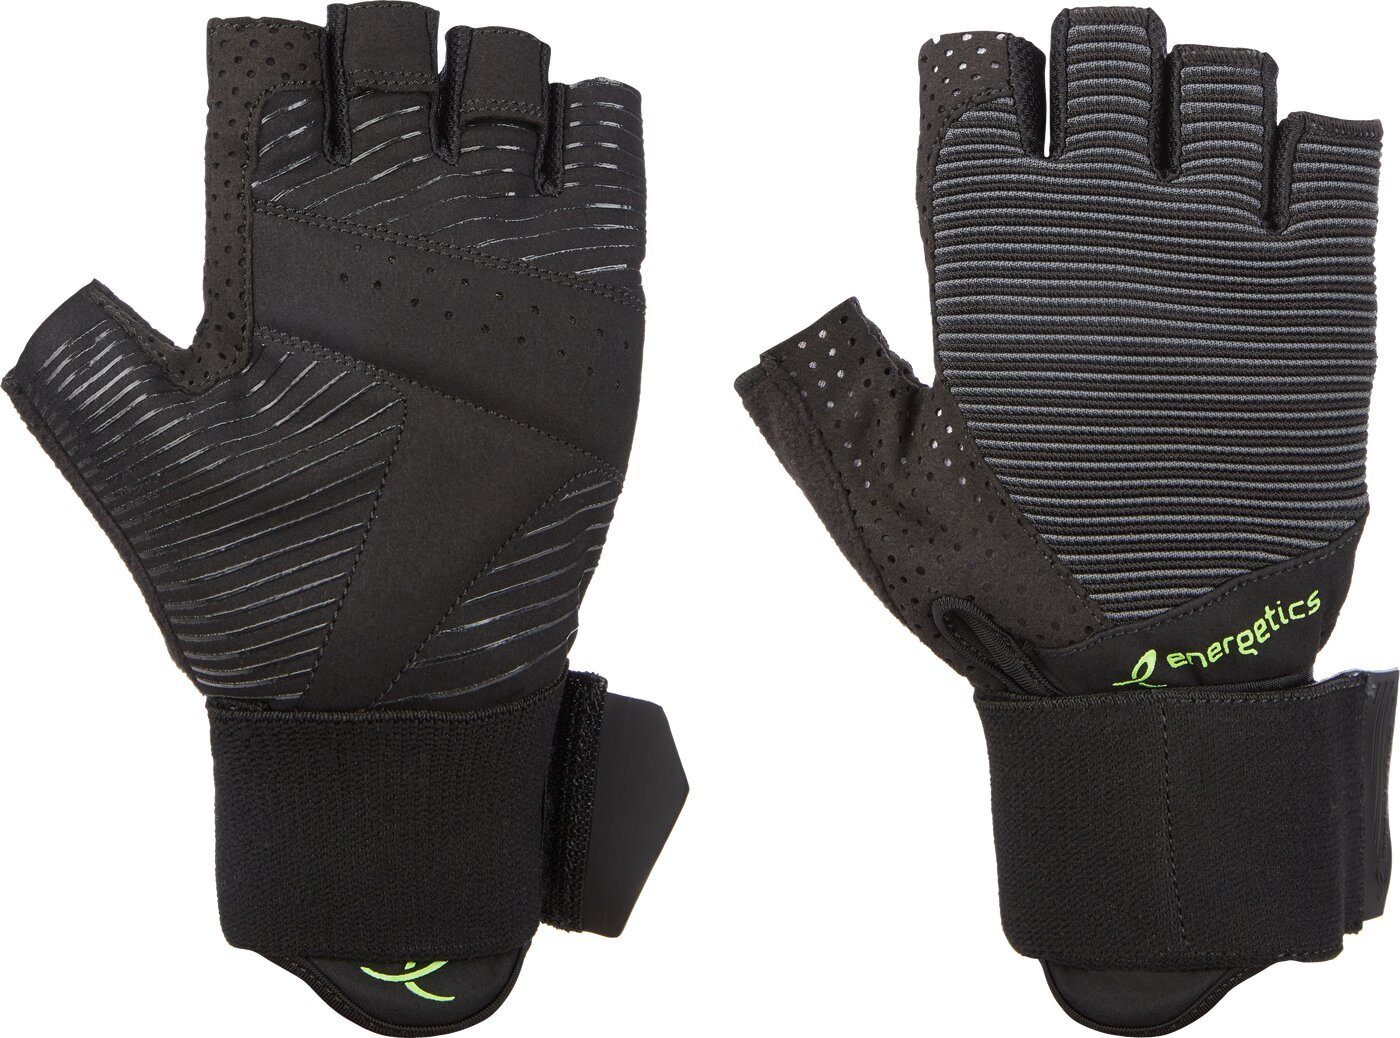 Energetics Gewichtshandschuhe Handschuh MFG550 BLACK/YELLOW